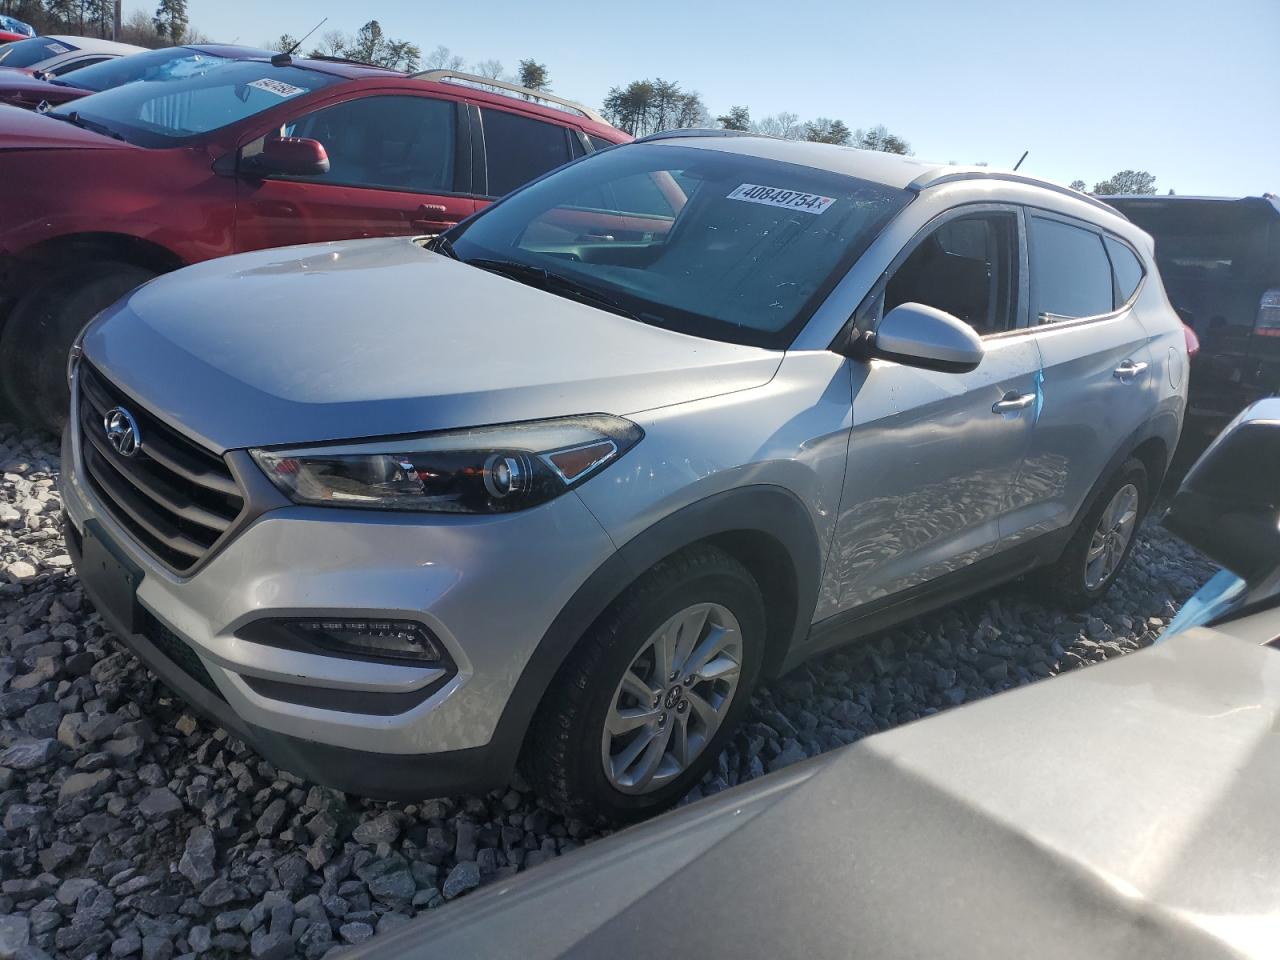 2016 Hyundai Tucson Special Edition